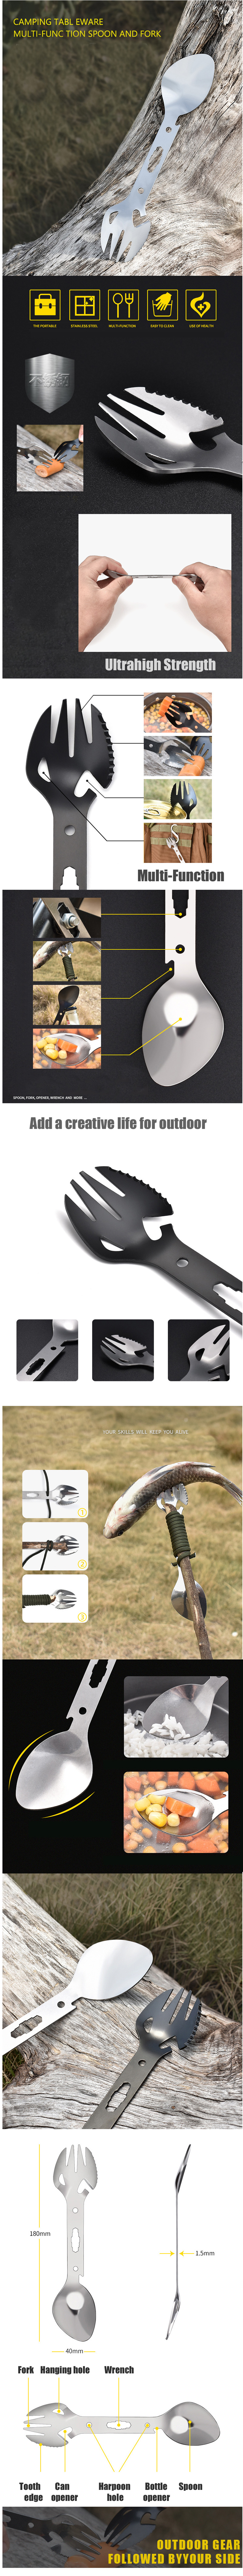 IPReereg-8-in-1-Multifunction-Fork-Spoon-Outdoor-Camping-Portable-Tableware-Survival-Tool-With-Opene-1665275-1